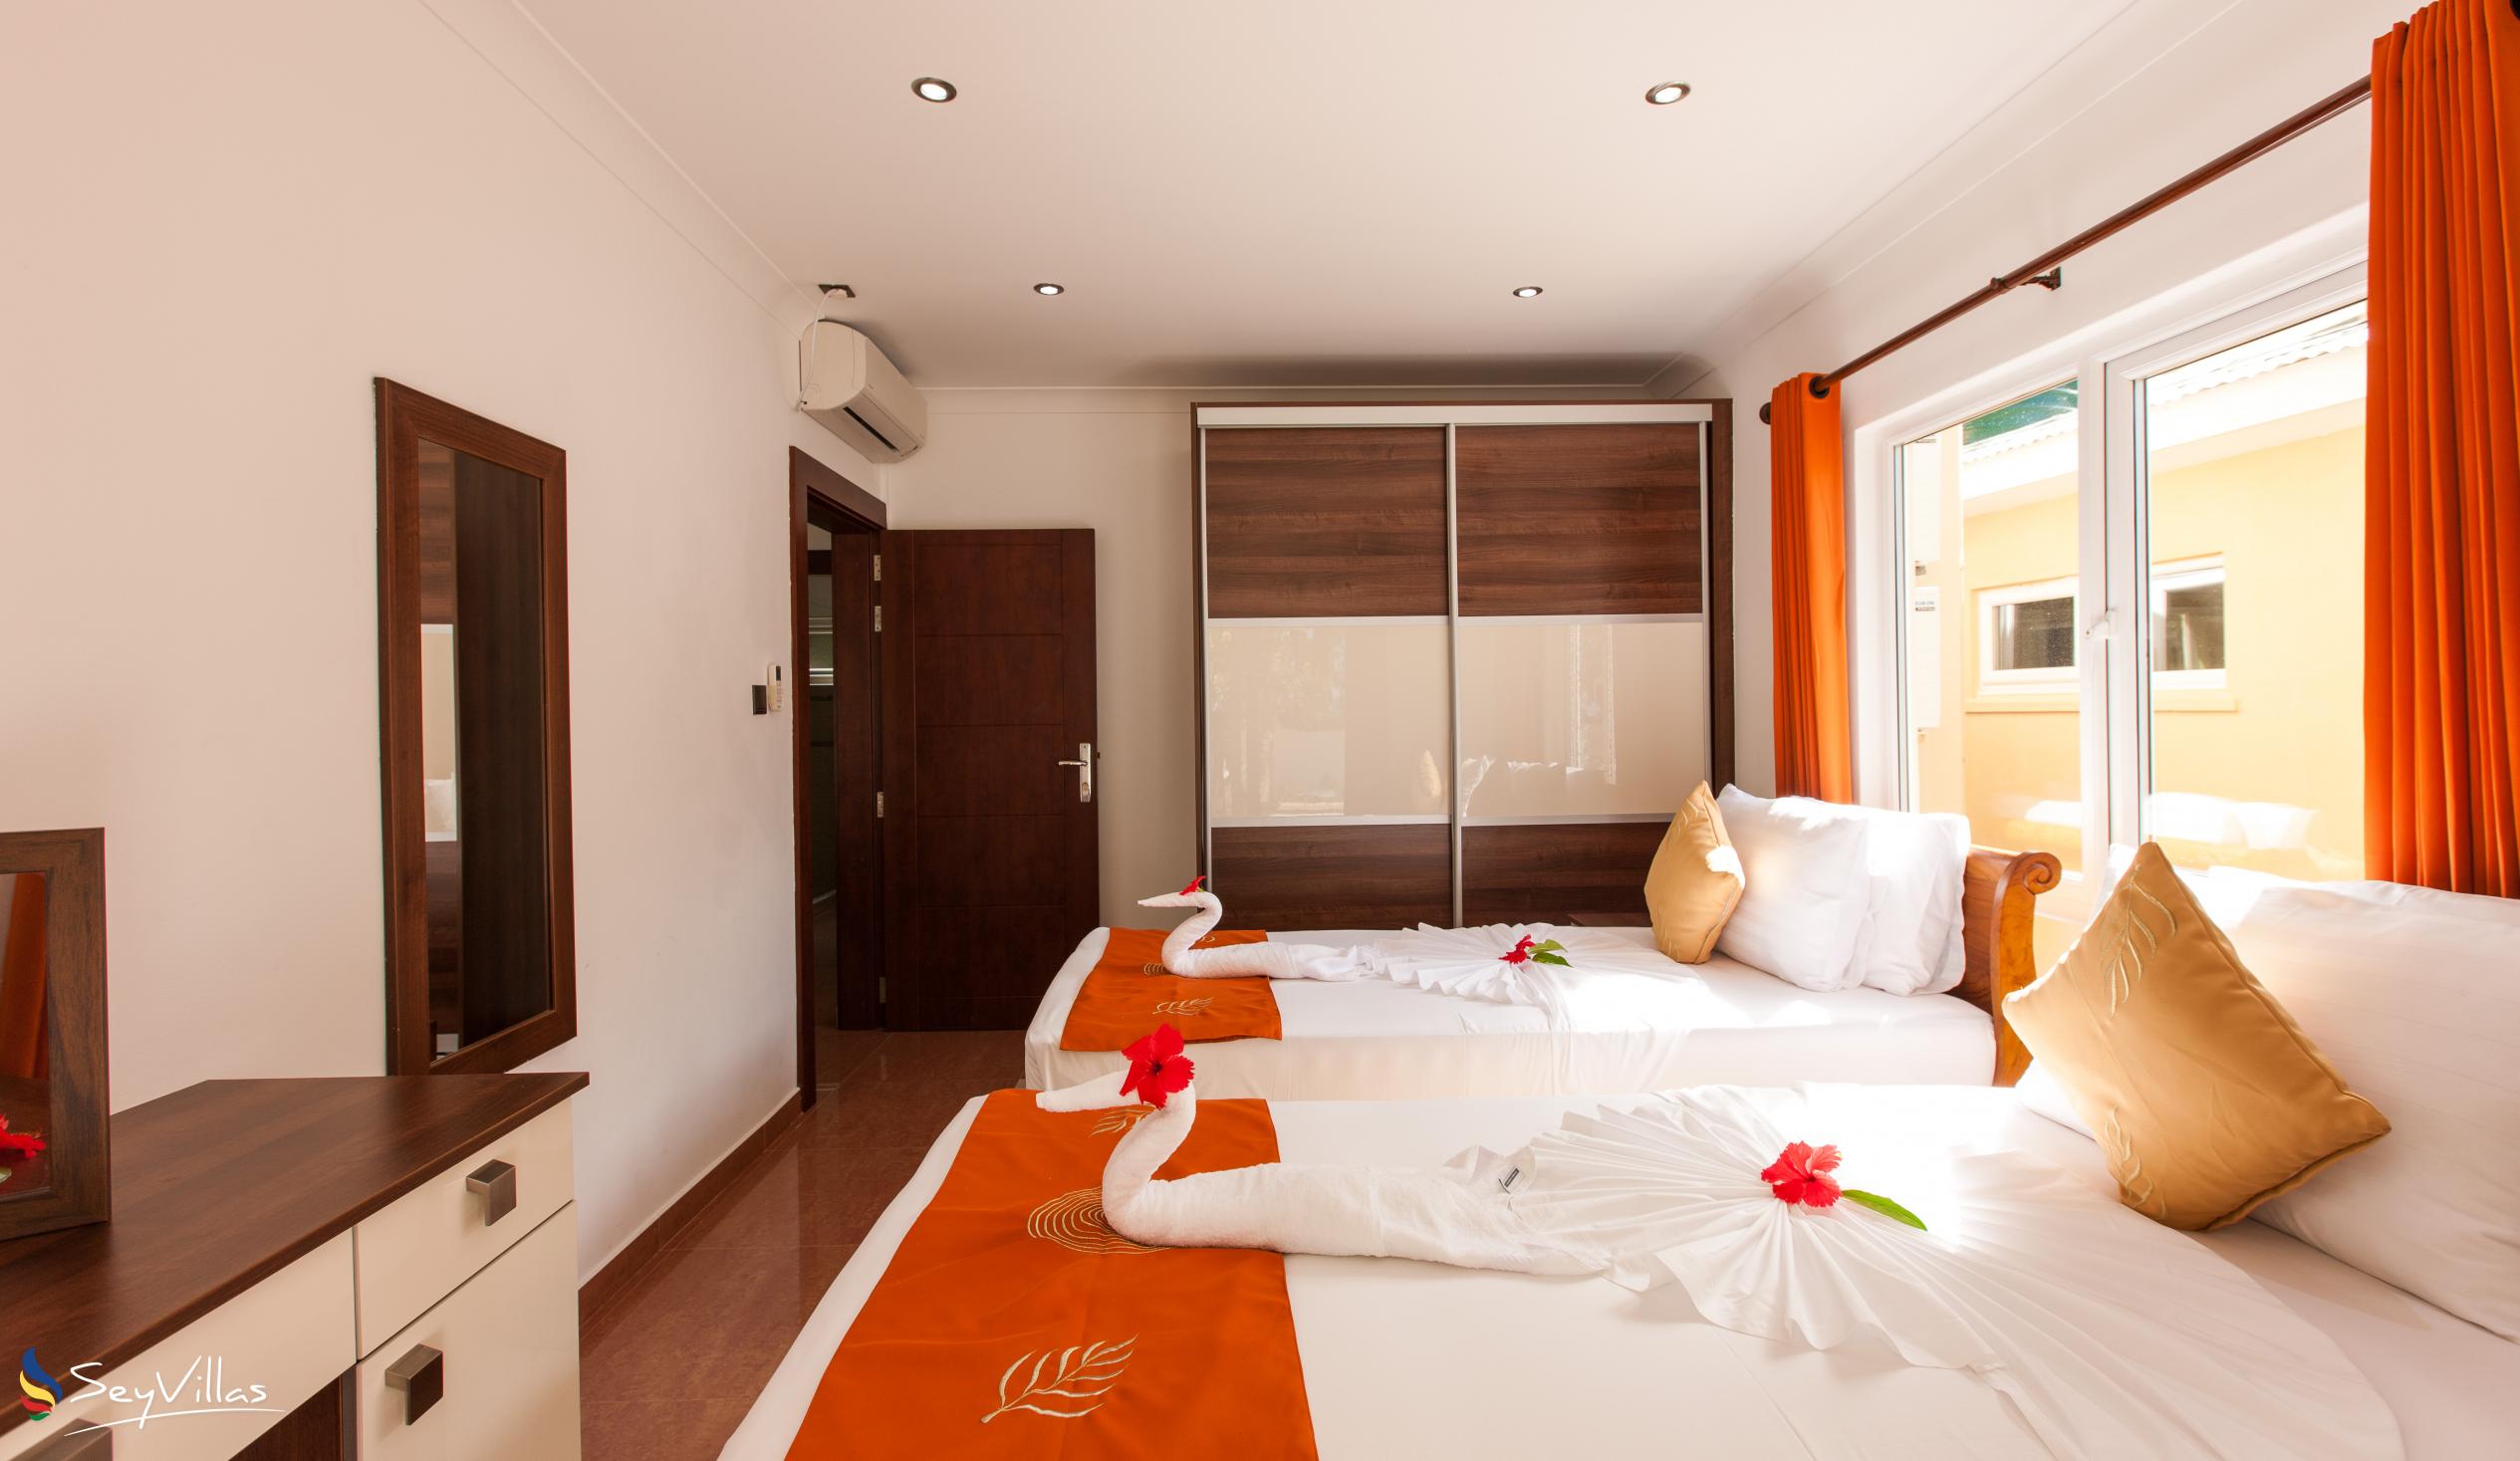 Photo 57: YASAD Luxury Beach Residence - 2-Bedroom Apartment - Praslin (Seychelles)